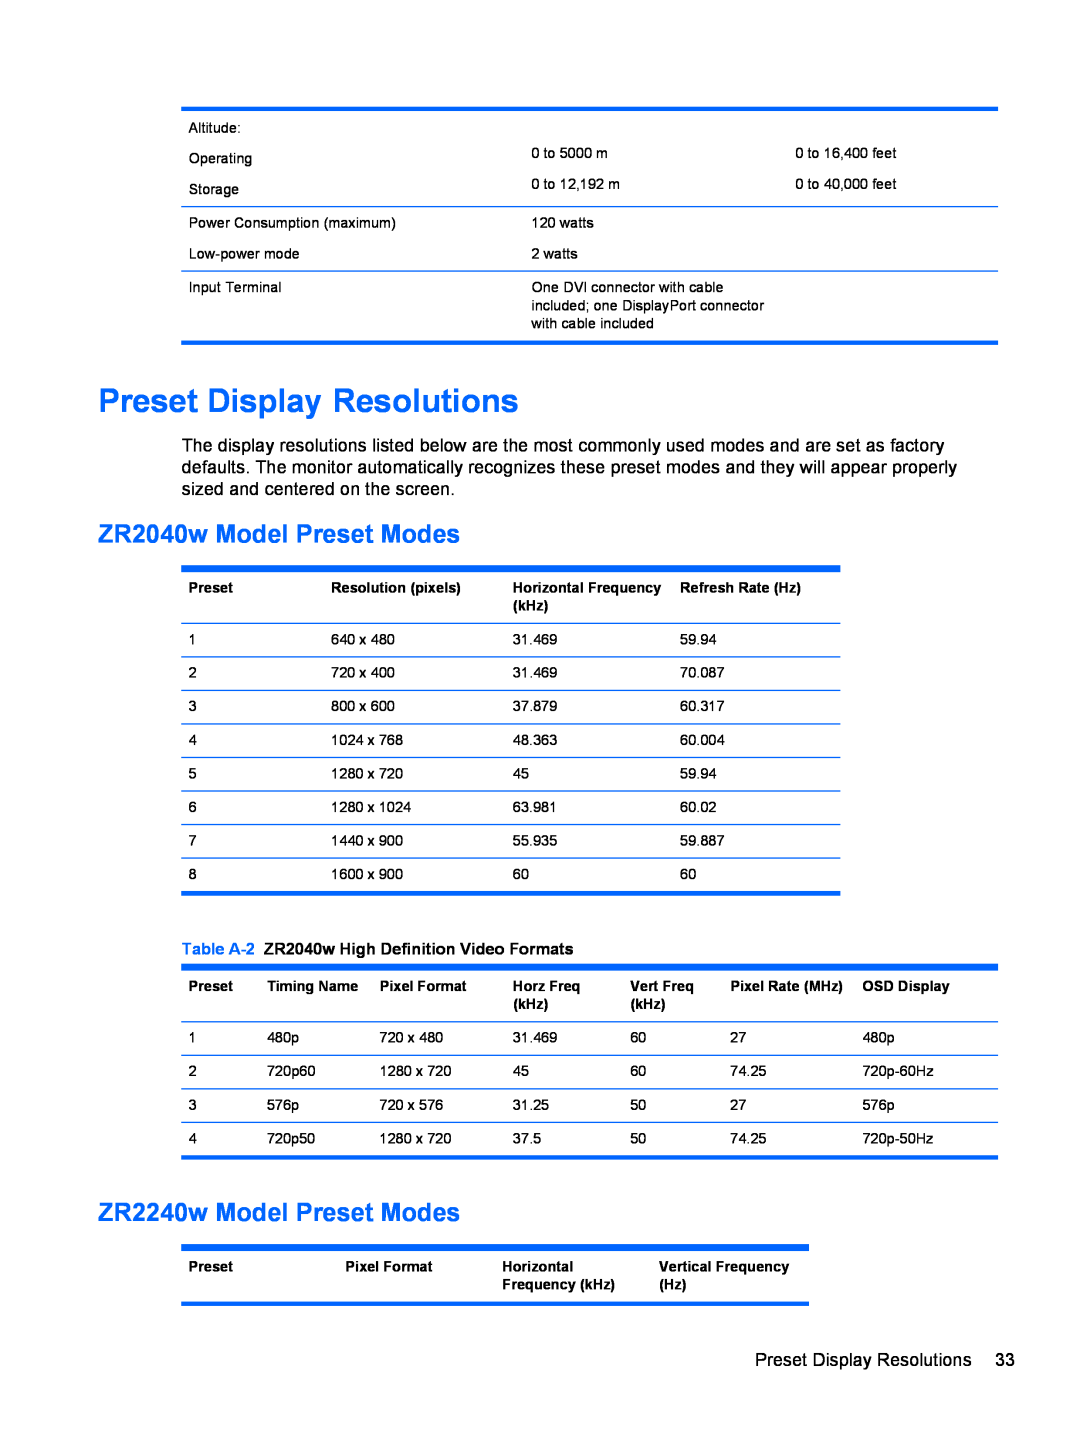 HP ZR2740w 27-inch IPS manual Preset Display Resolutions, ZR2040w Model Preset Modes, ZR2240w Model Preset Modes 